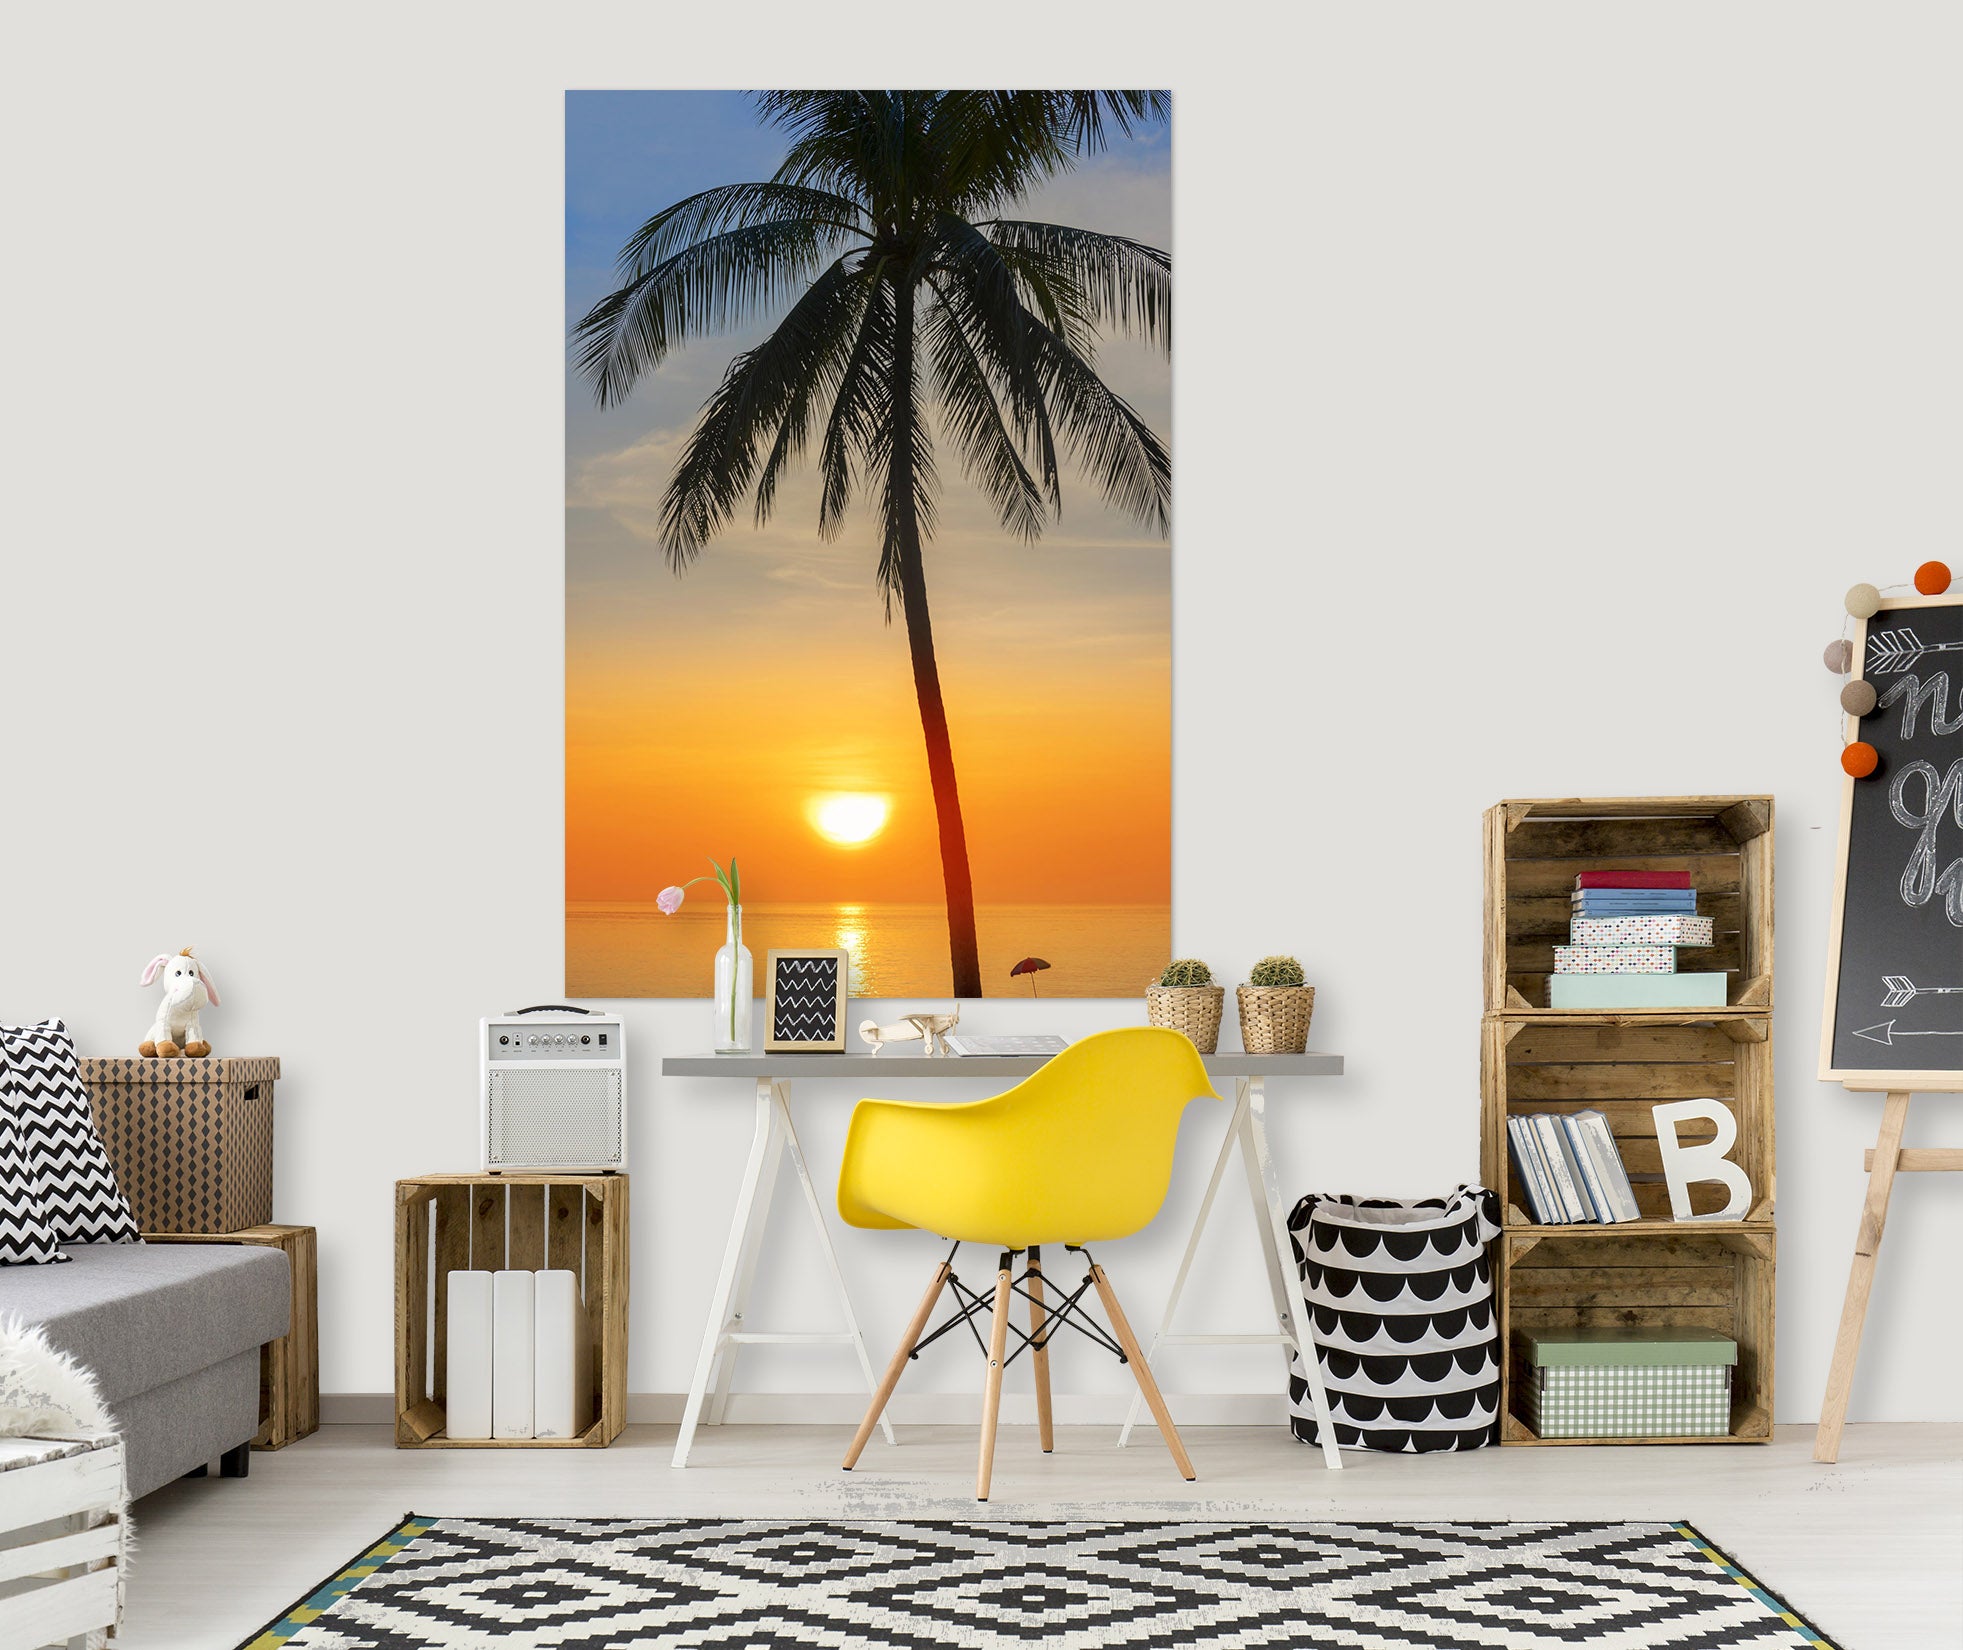 3D Sunset Coconut Tree 227 Marco Carmassi Wall Sticker